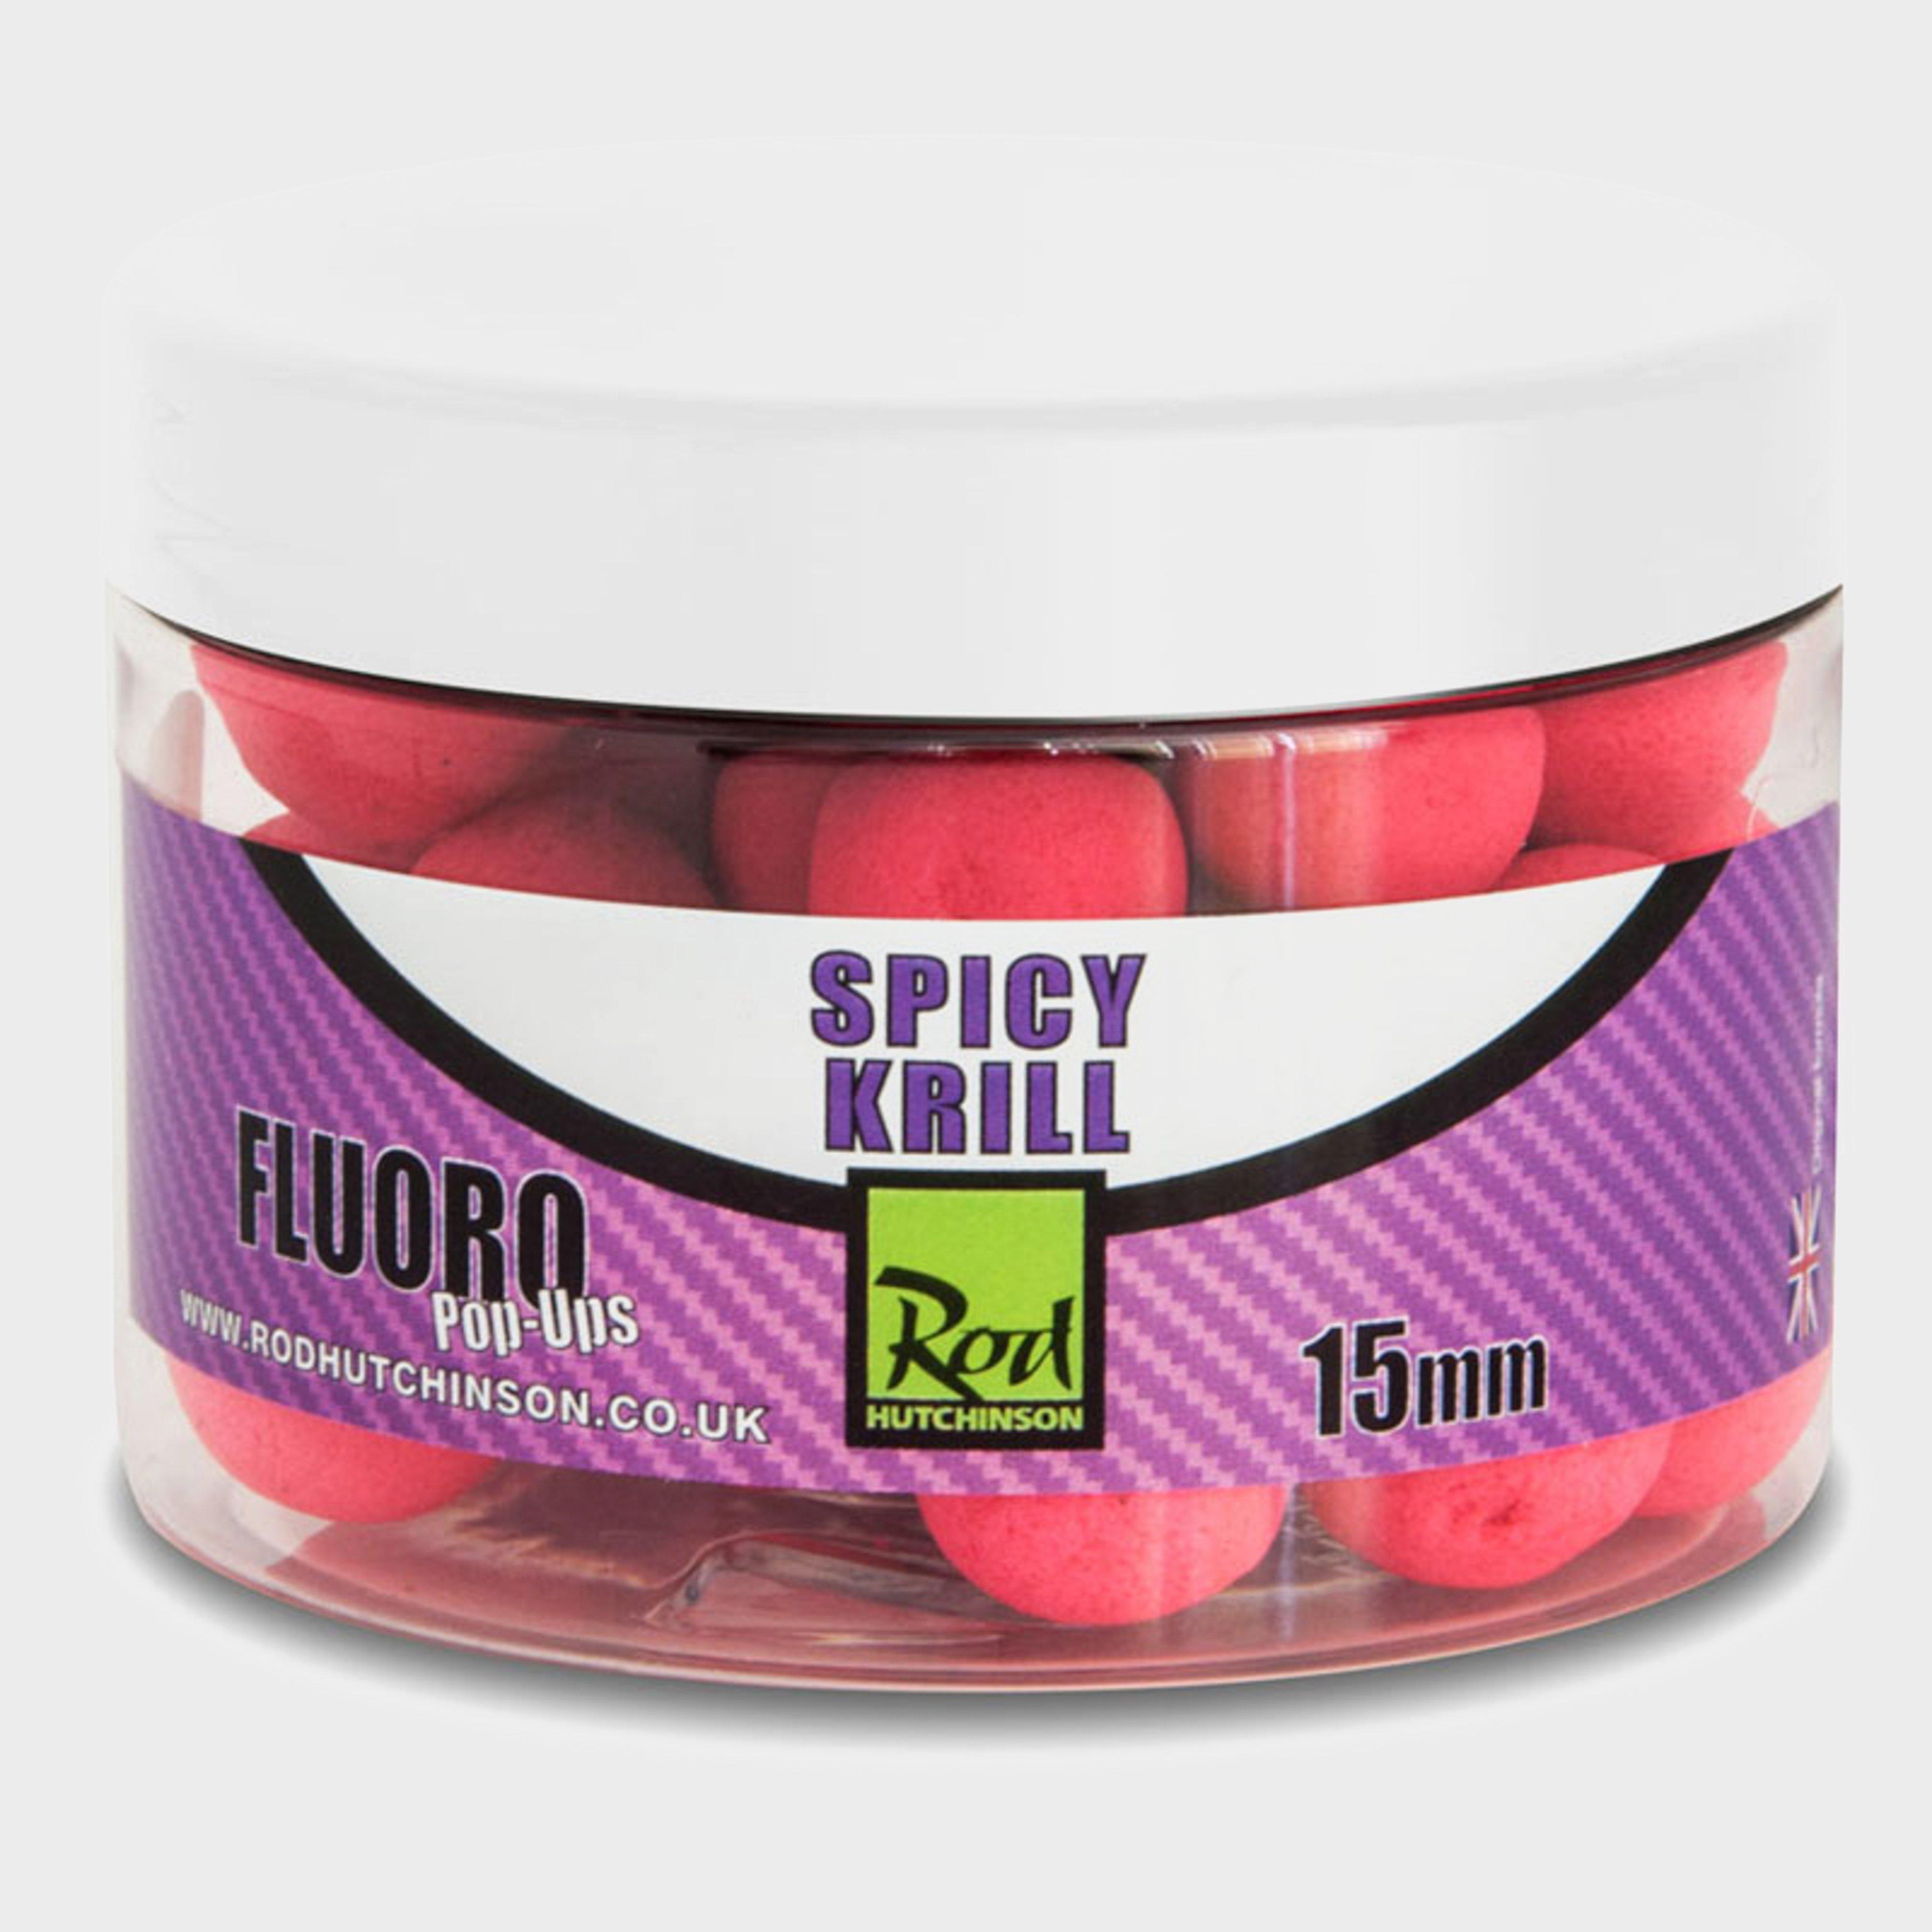 R Hutchinson Fluoro Pop Ups 15mm  Spicy Krill  Red